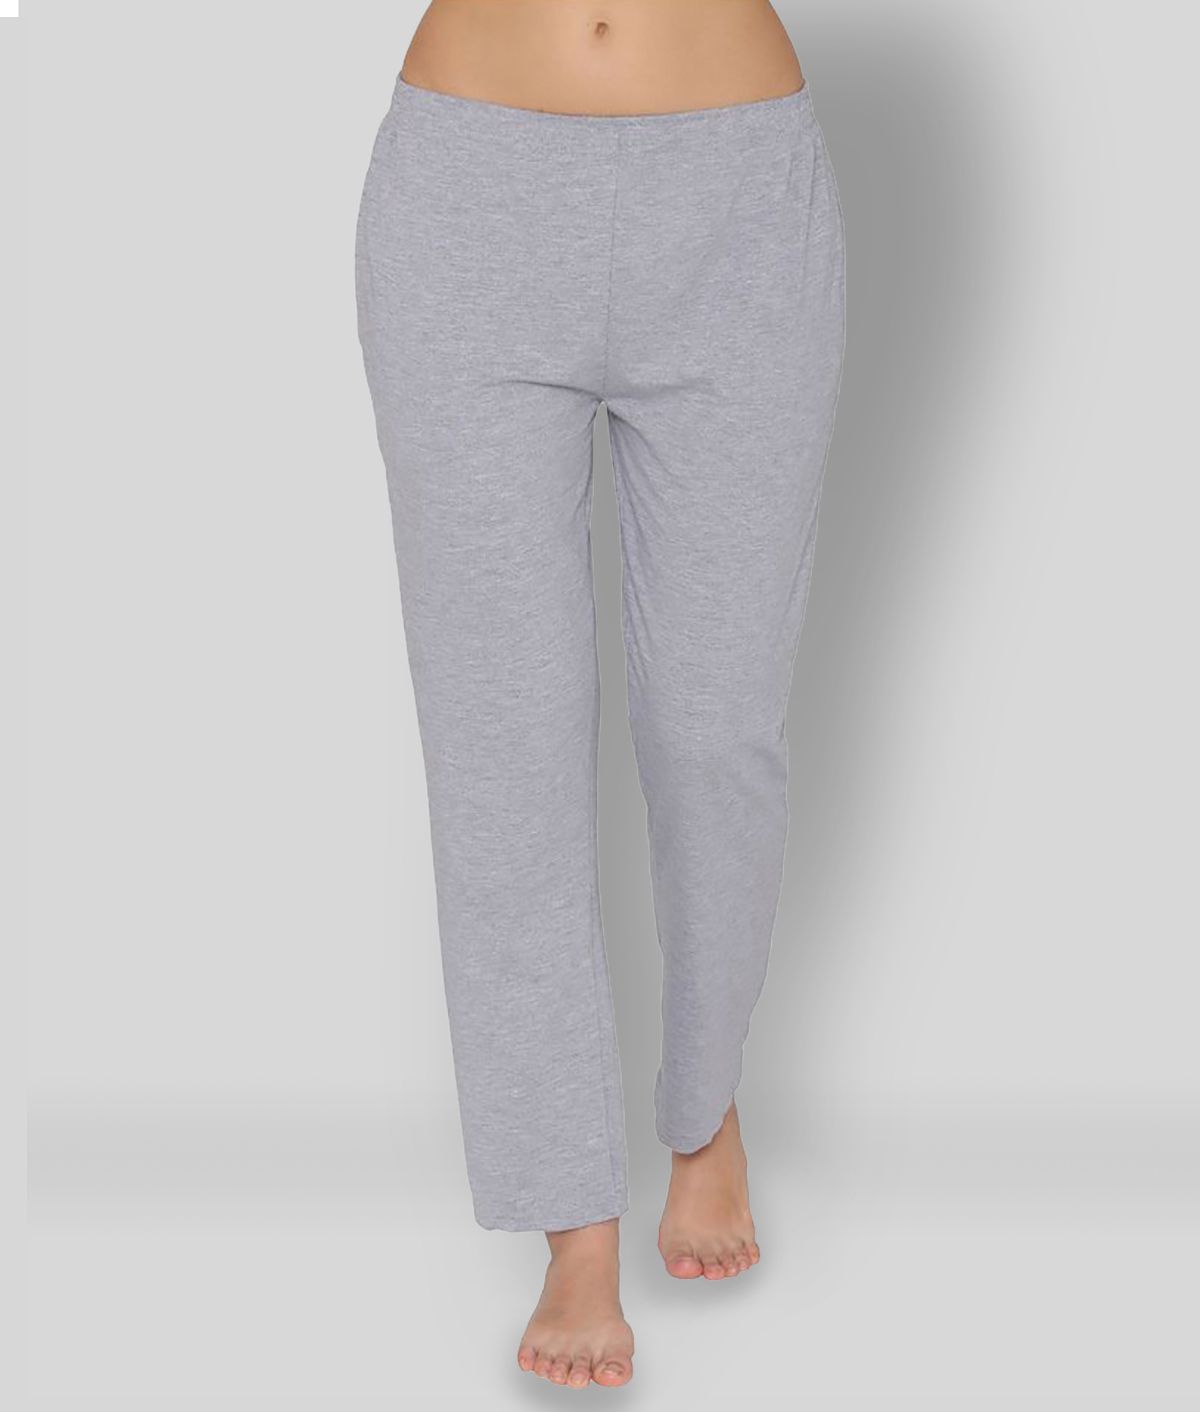     			Clovia - Light Grey Cotton Women's Nightwear Pyjama ( Pack of 1 )